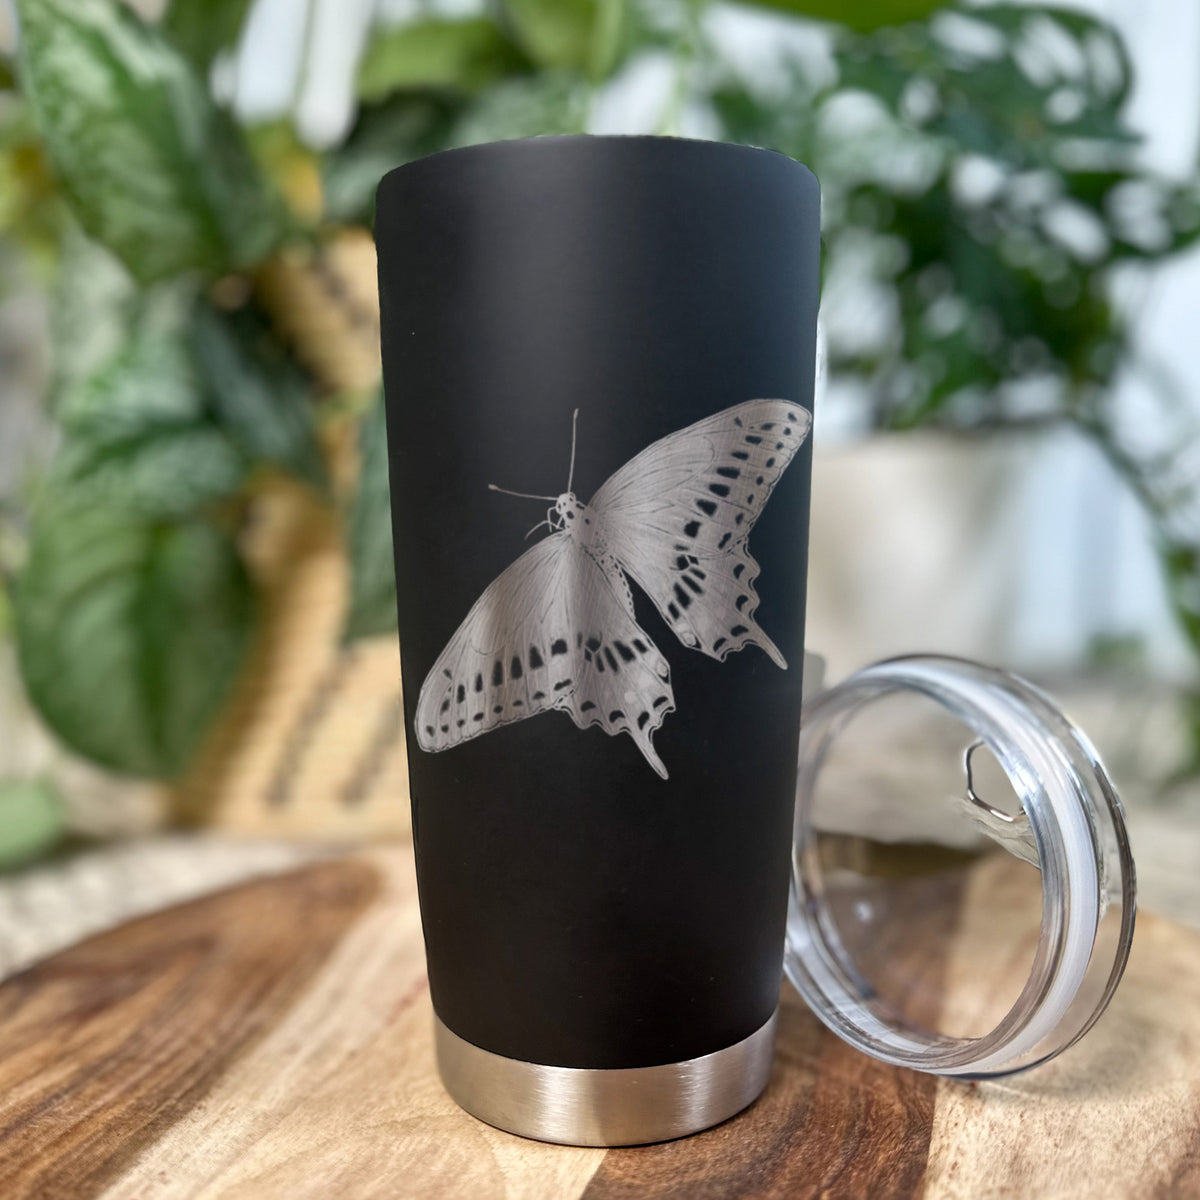 Black Swallowtail Butterfly - Papilio polyxenes - 20oz Polar Insulated Tumbler